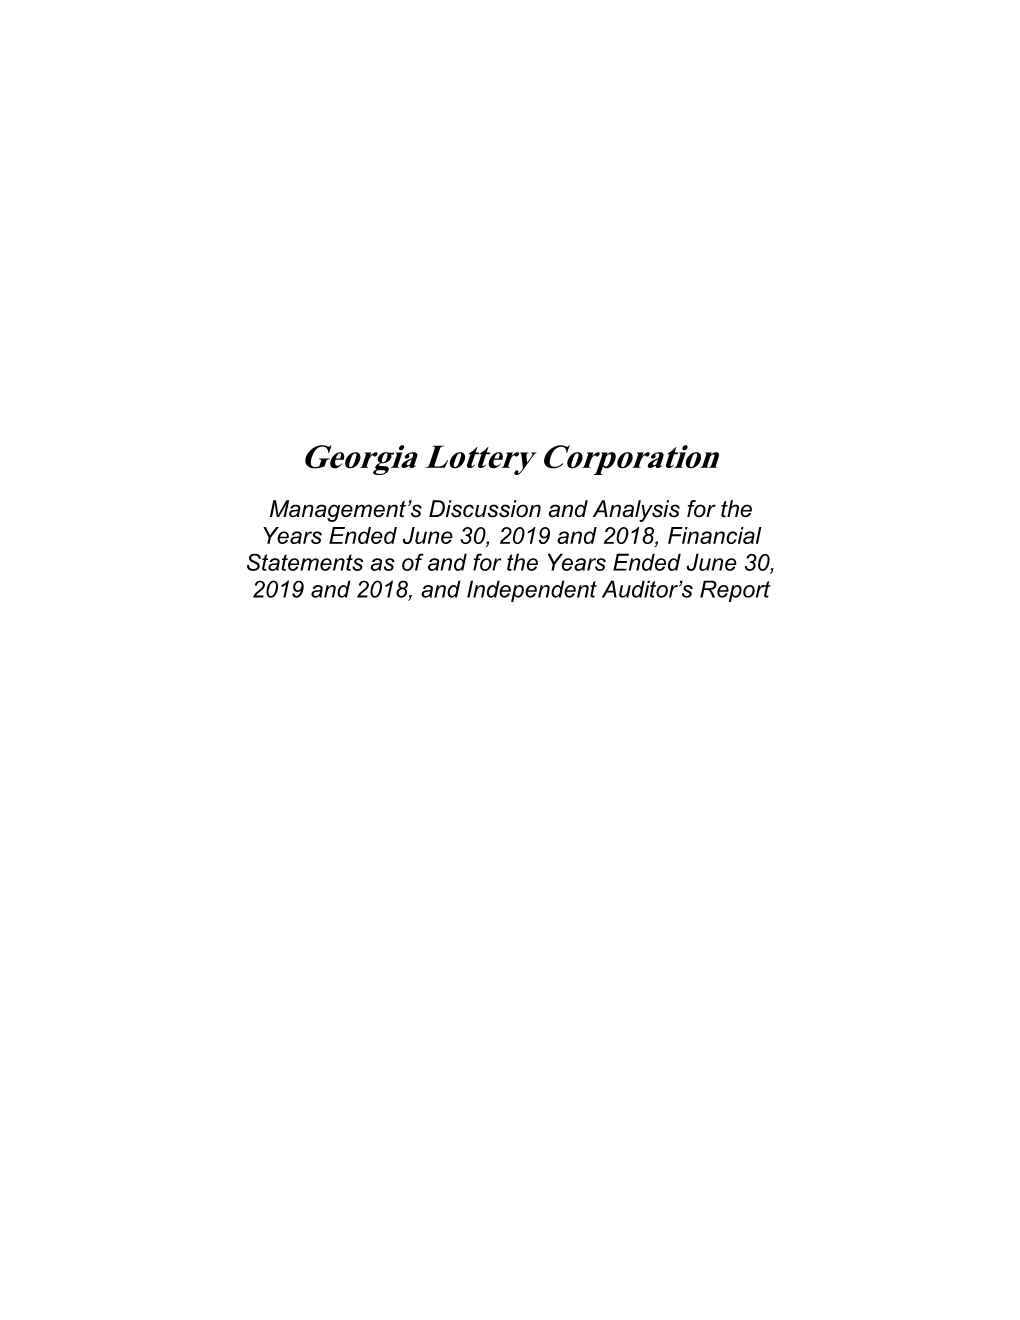 Georgia Lottery 2019 Financial Statements